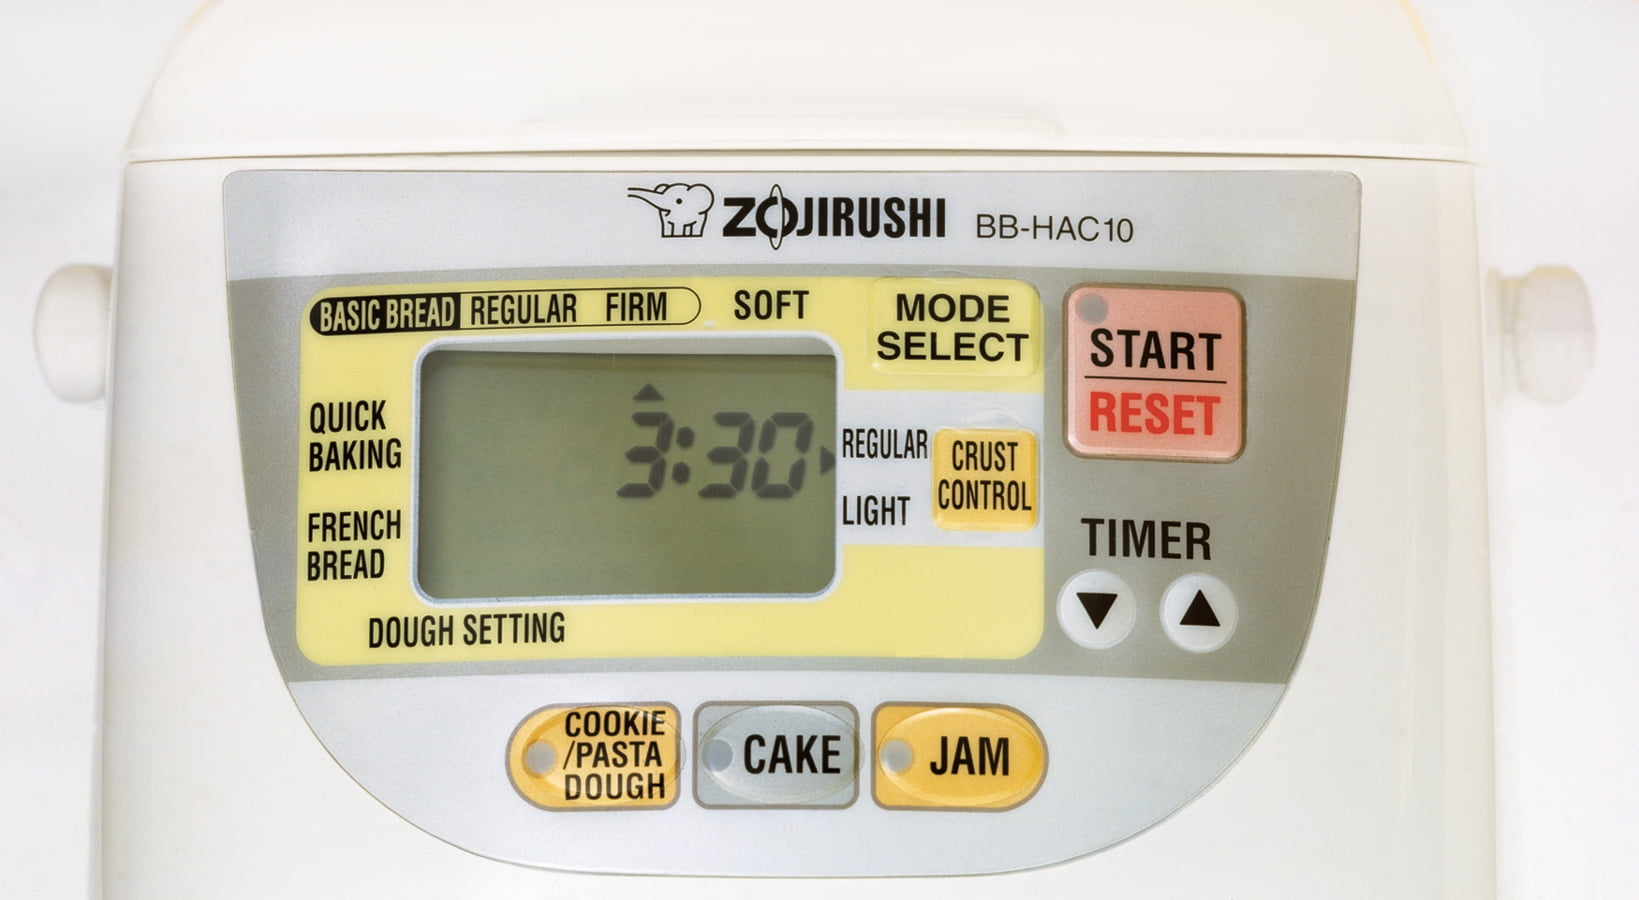 Zojirushi BB-HAC10 Home Bakery Mini Breadmaker Review: Compact